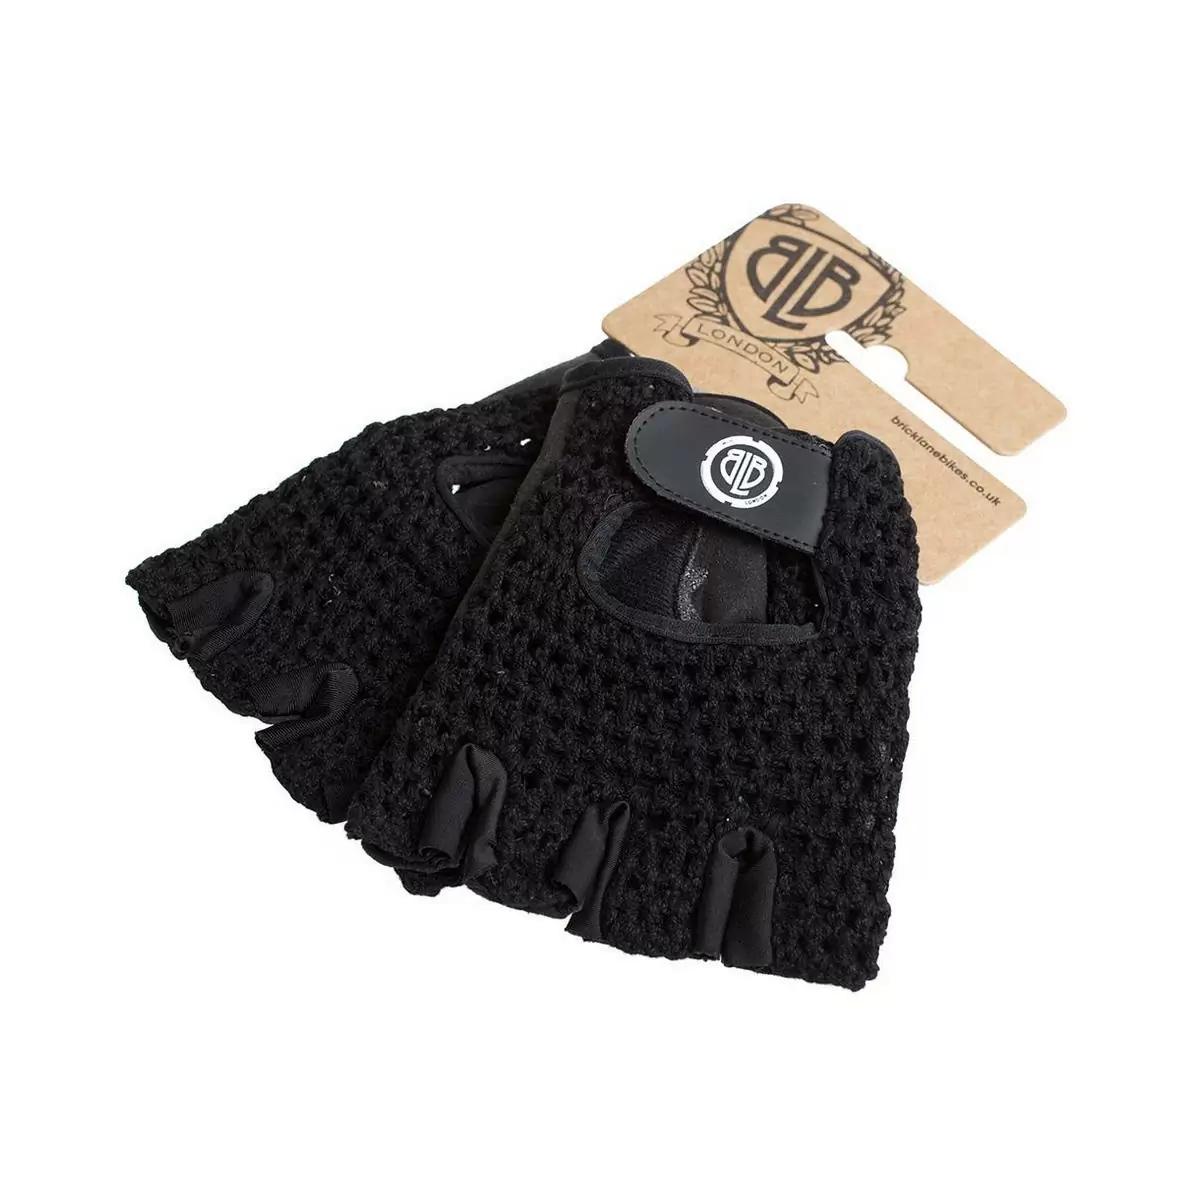 Vintage cycling gloves crochet string size M black #2